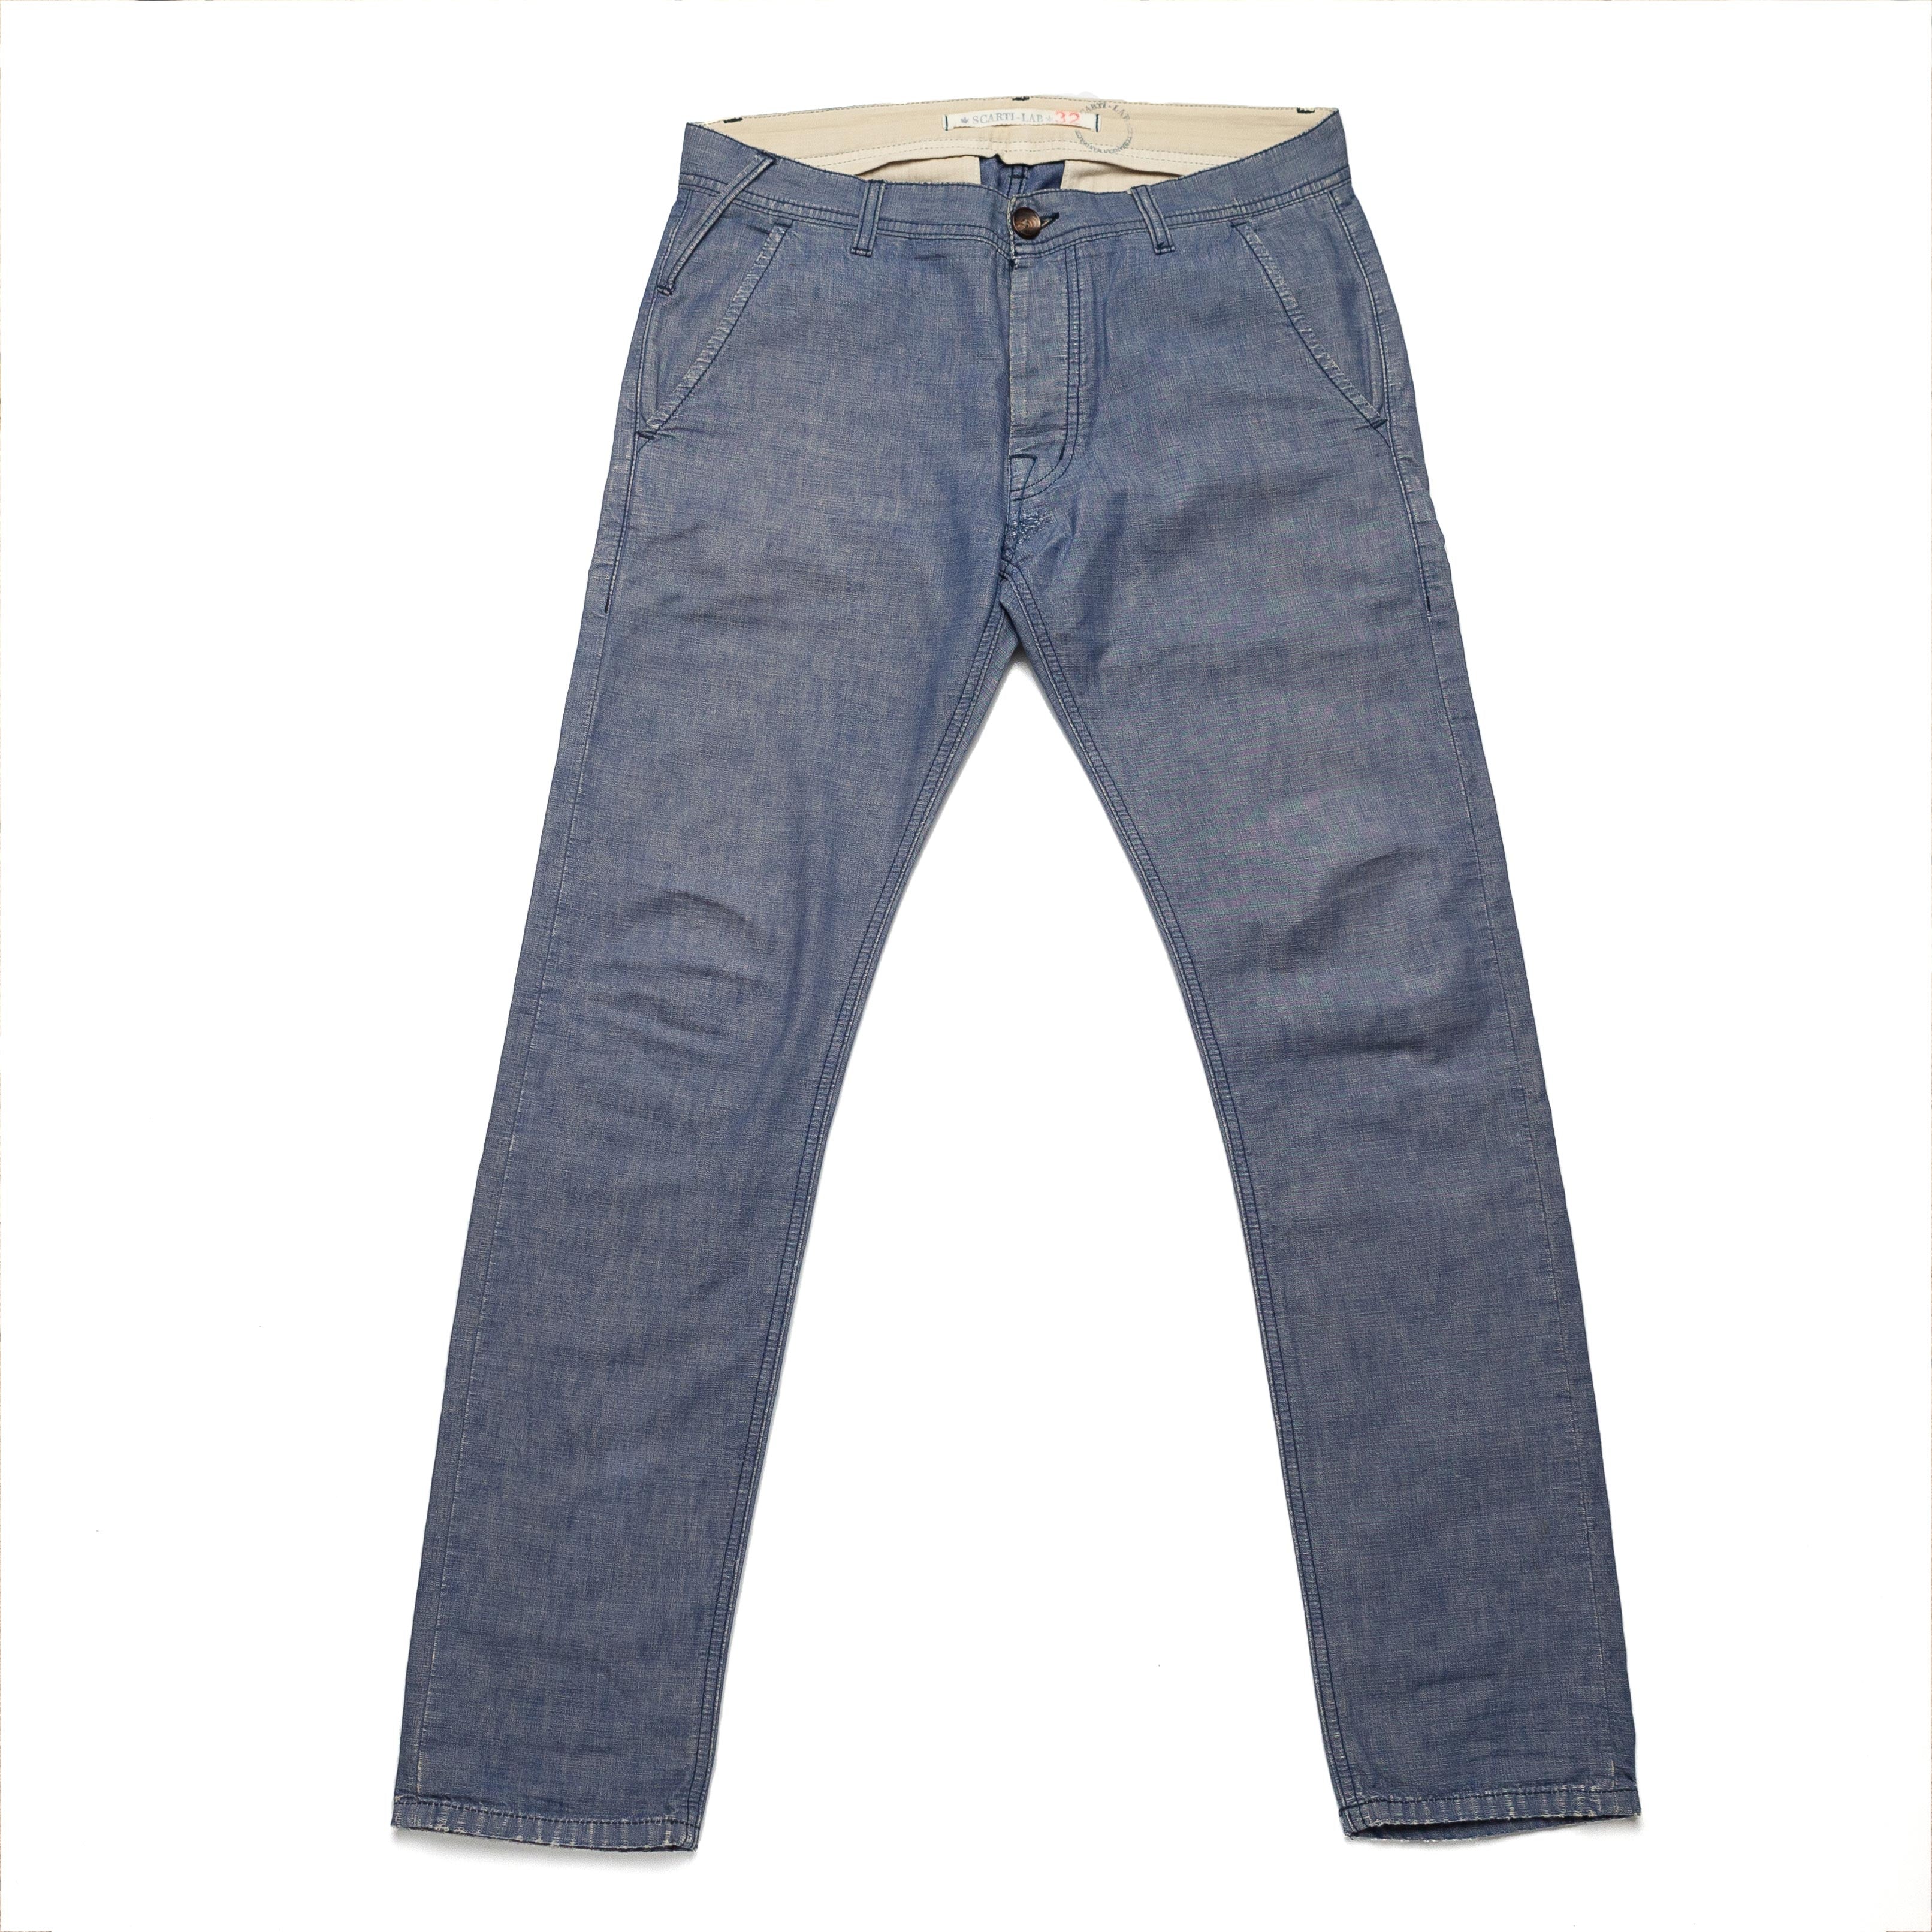 Pants Style 120/SK877 - W32